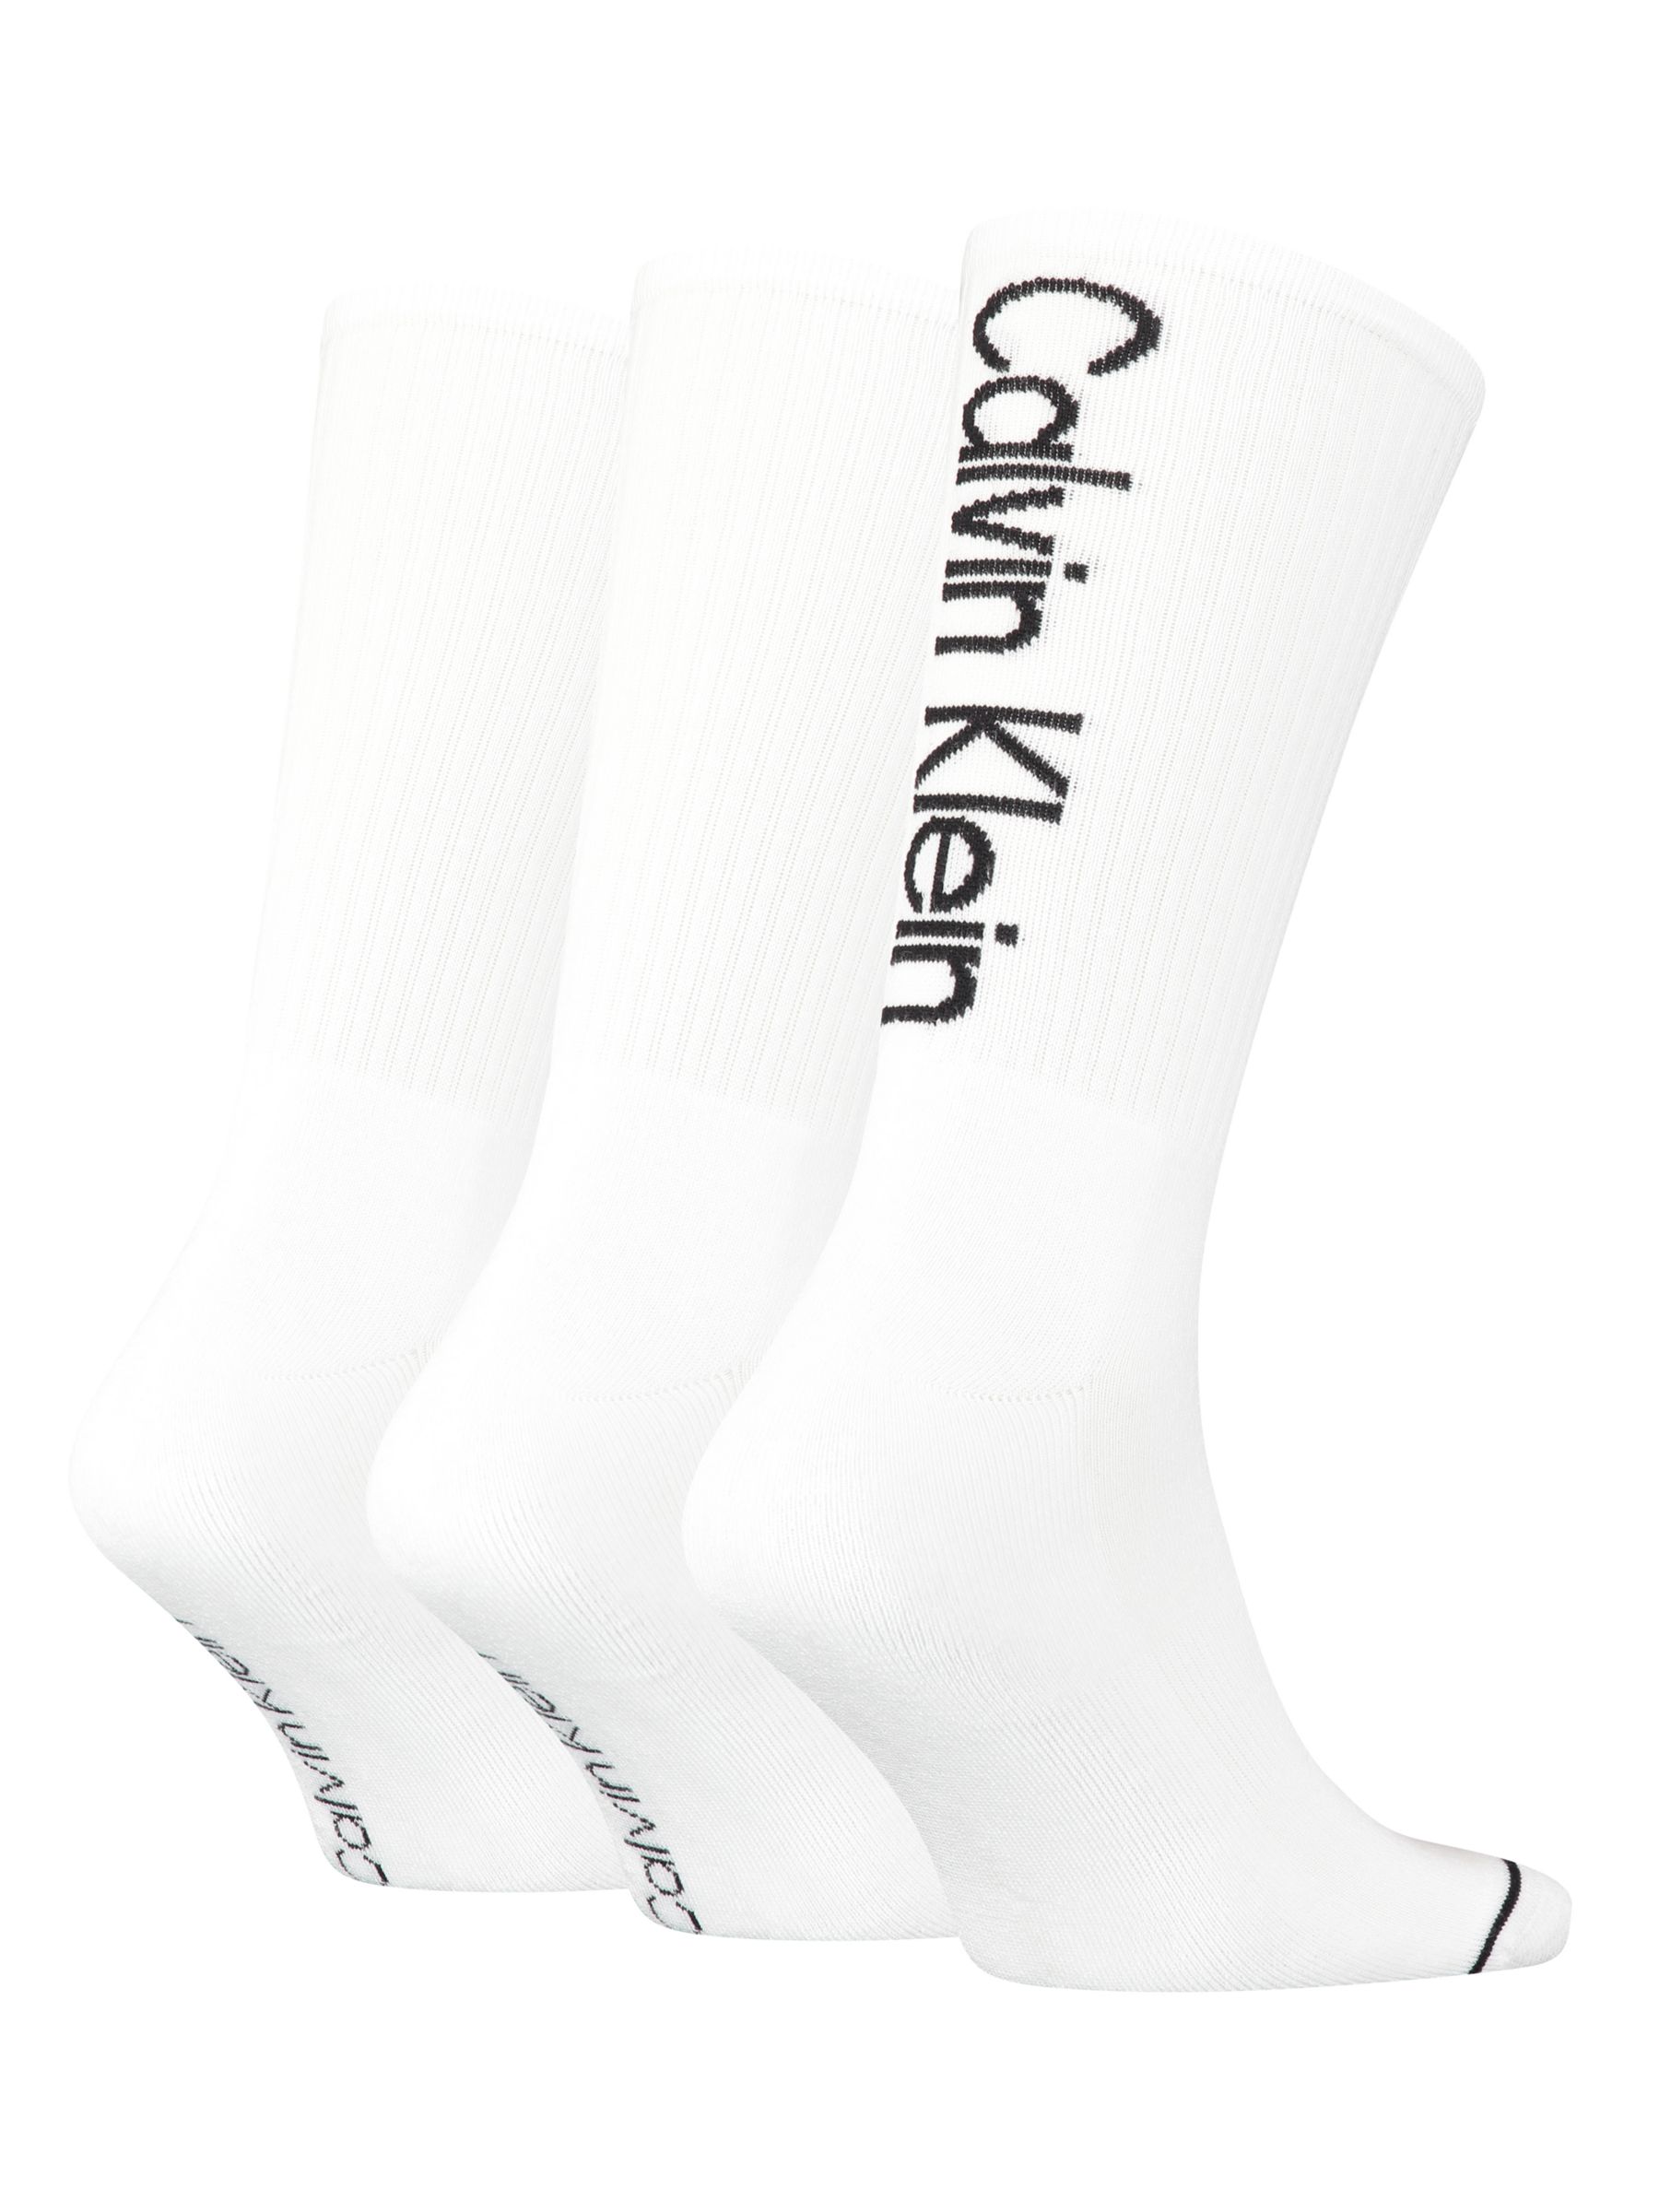 Buy Calvin Klein Toe Seam Logo Socks, One Size, Pack of 3 Online at johnlewis.com